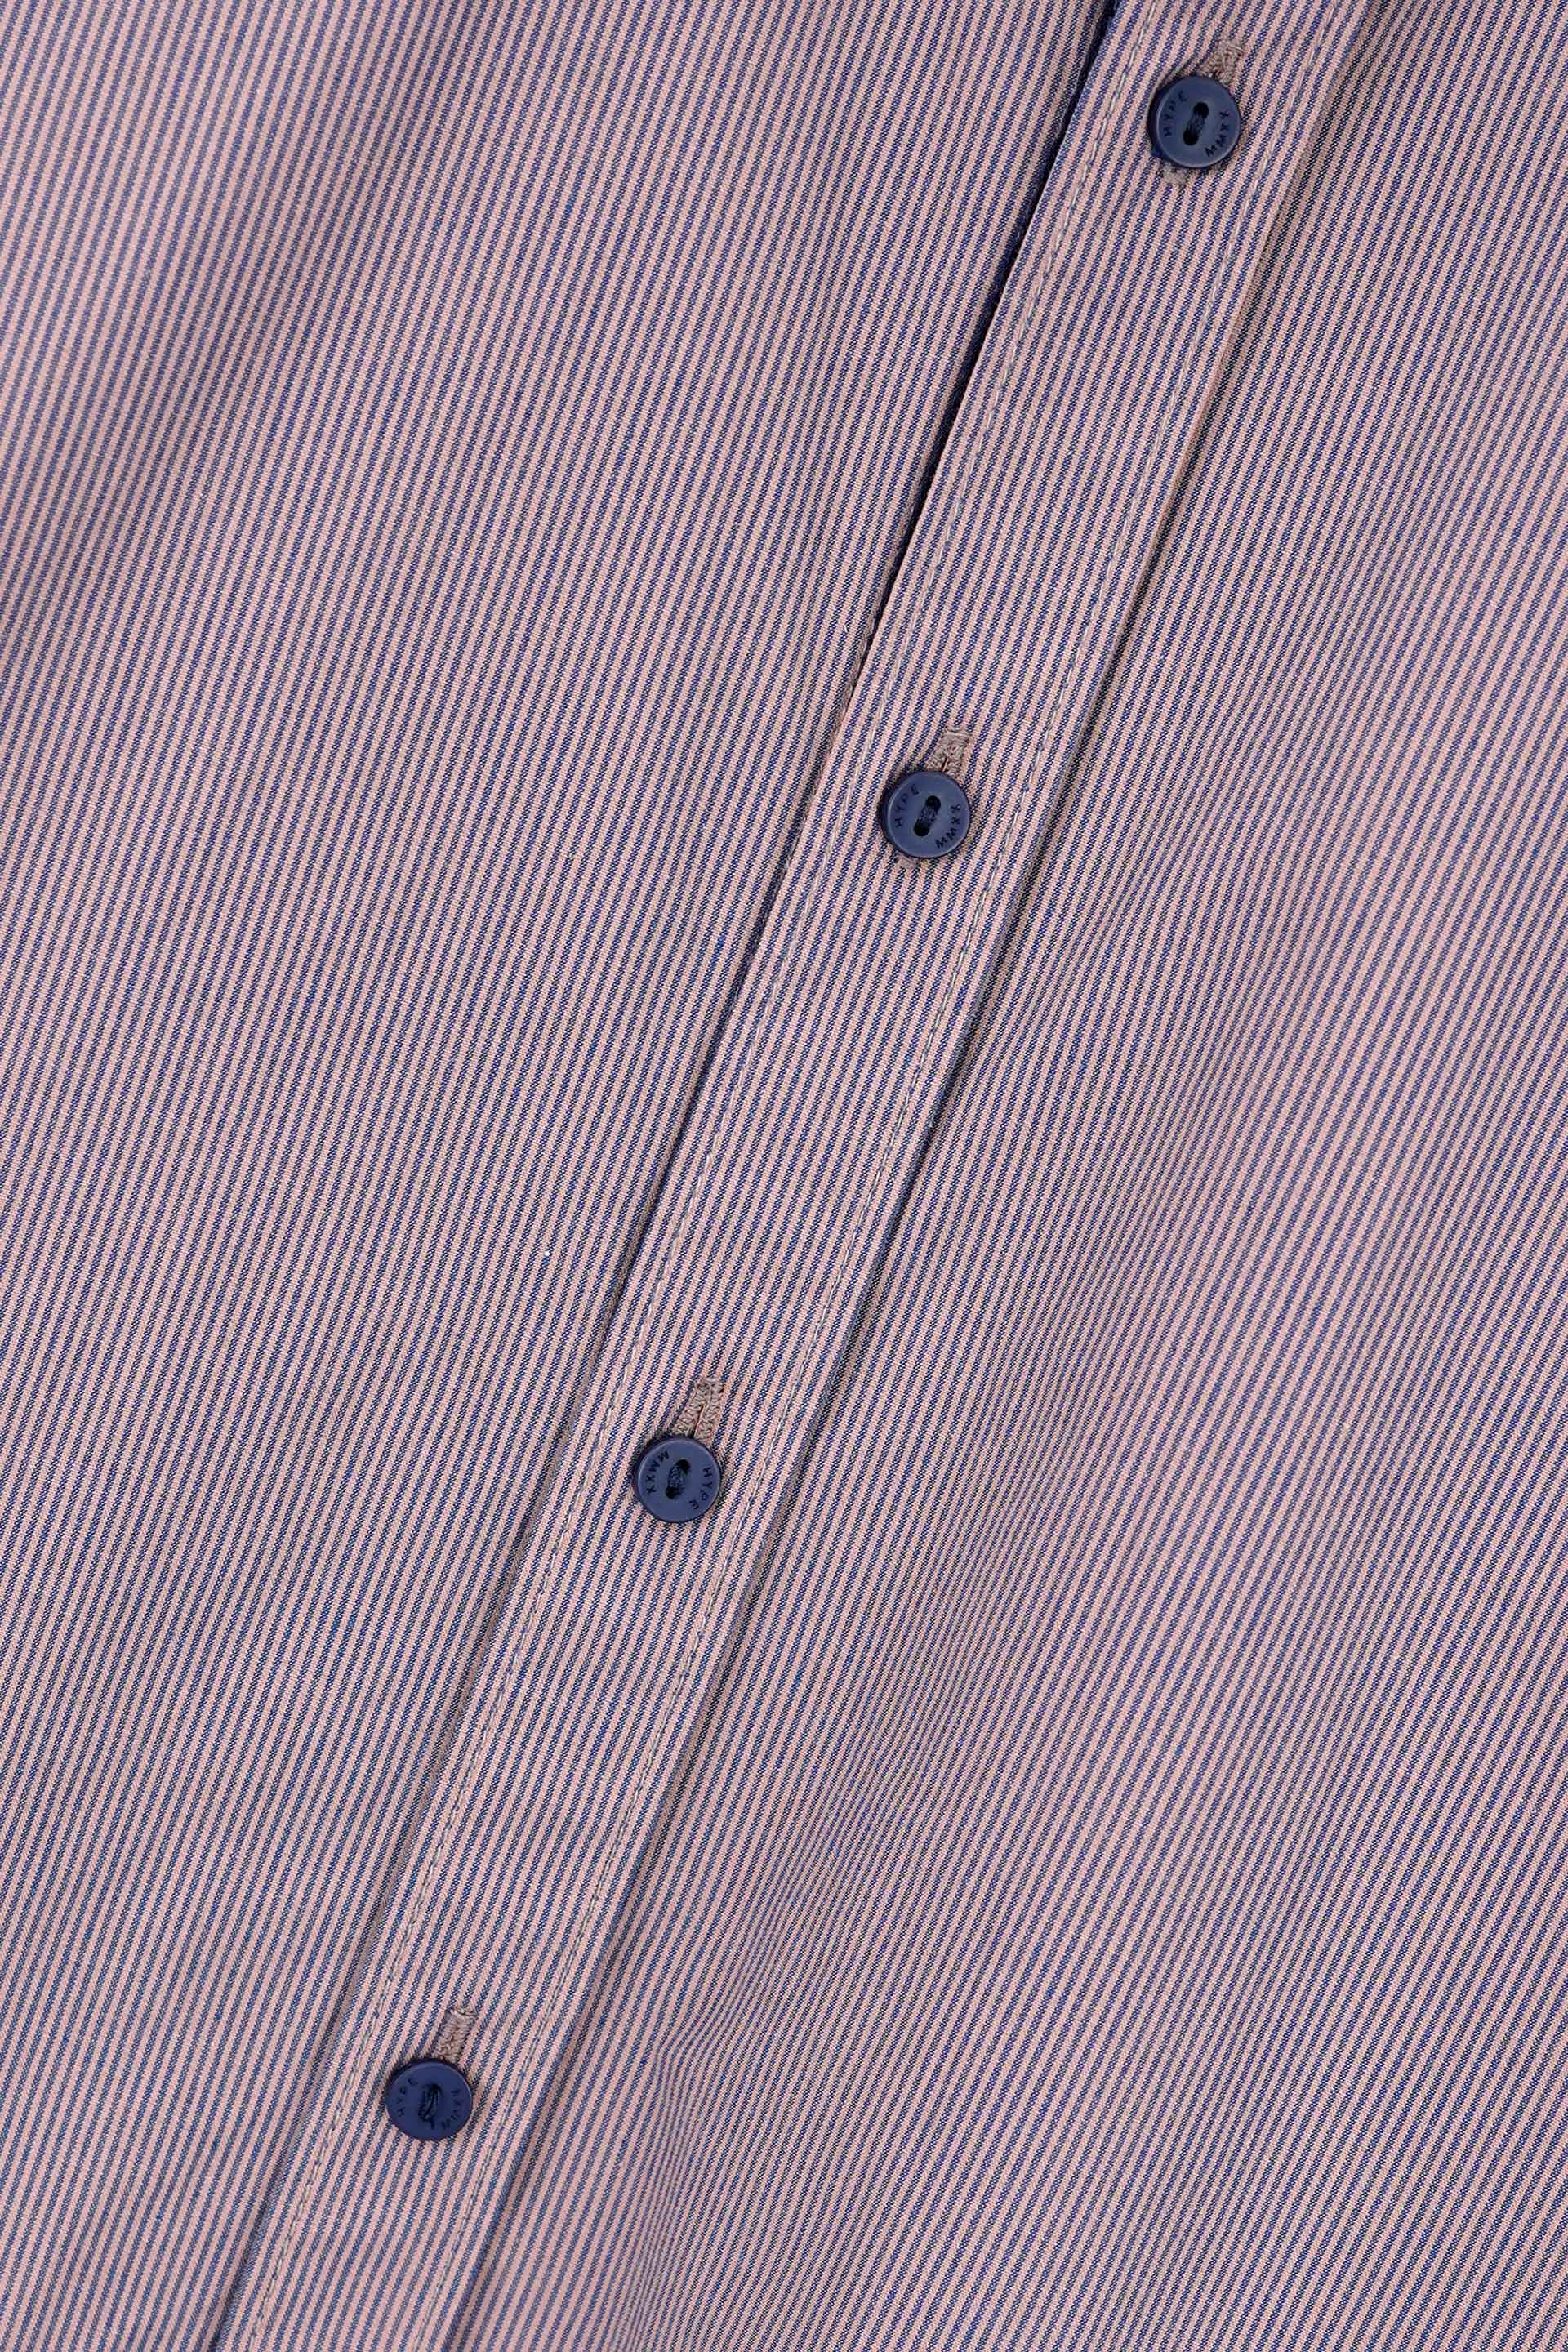 Mens Soft Cotton Stripes Casual Shirt 002482